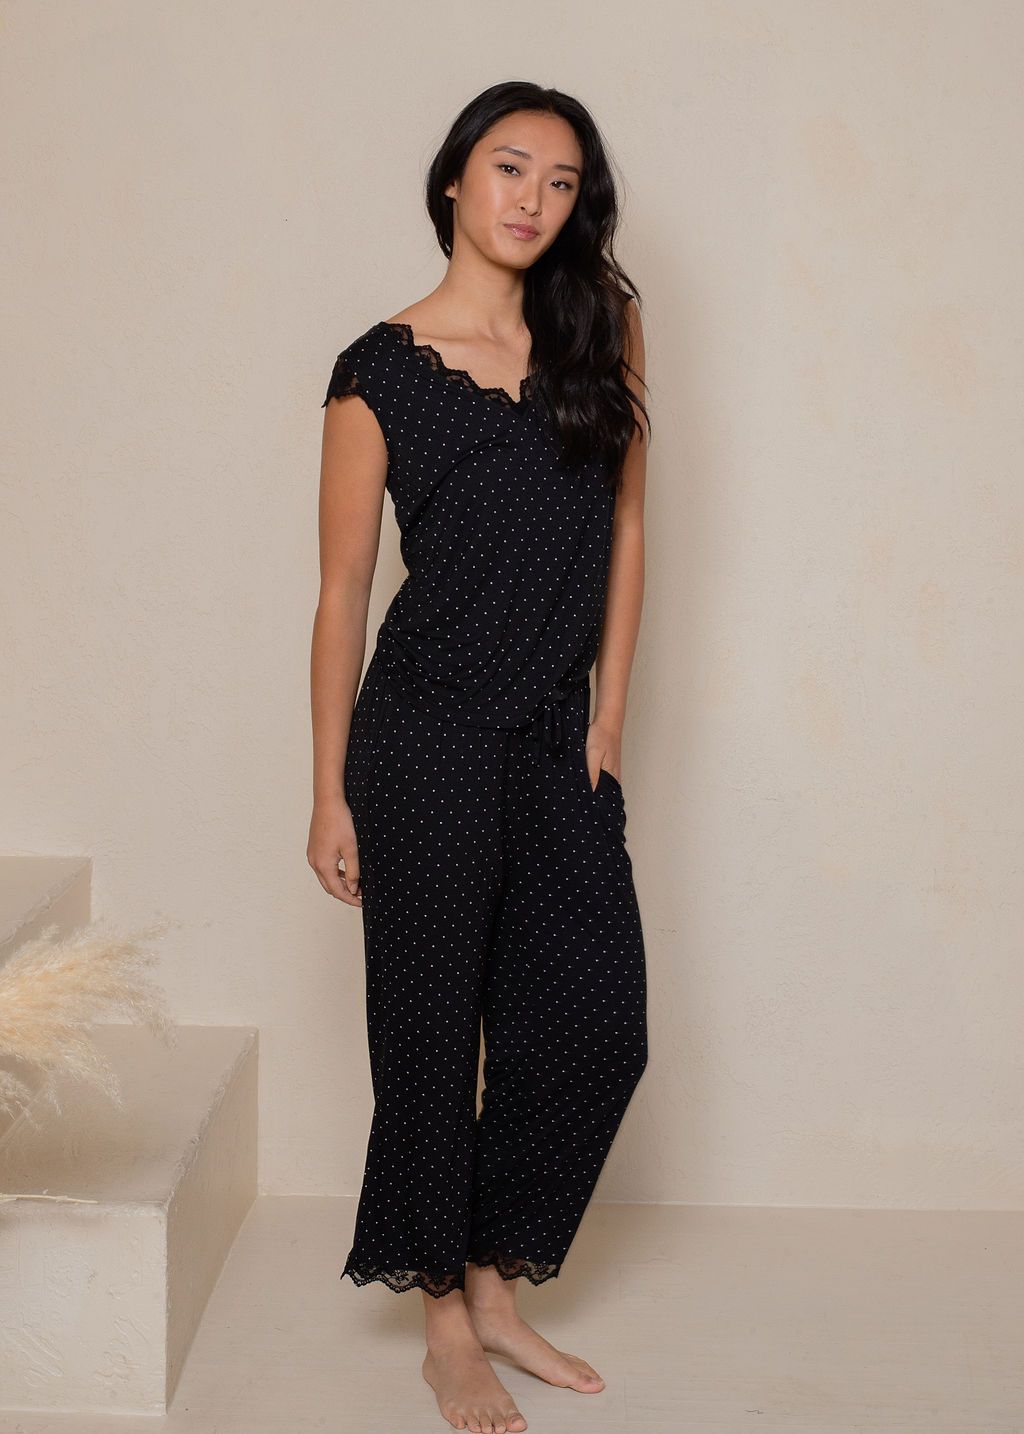 BULK BUY - Women's Peached Jersey Knit Capri Pajama Set with